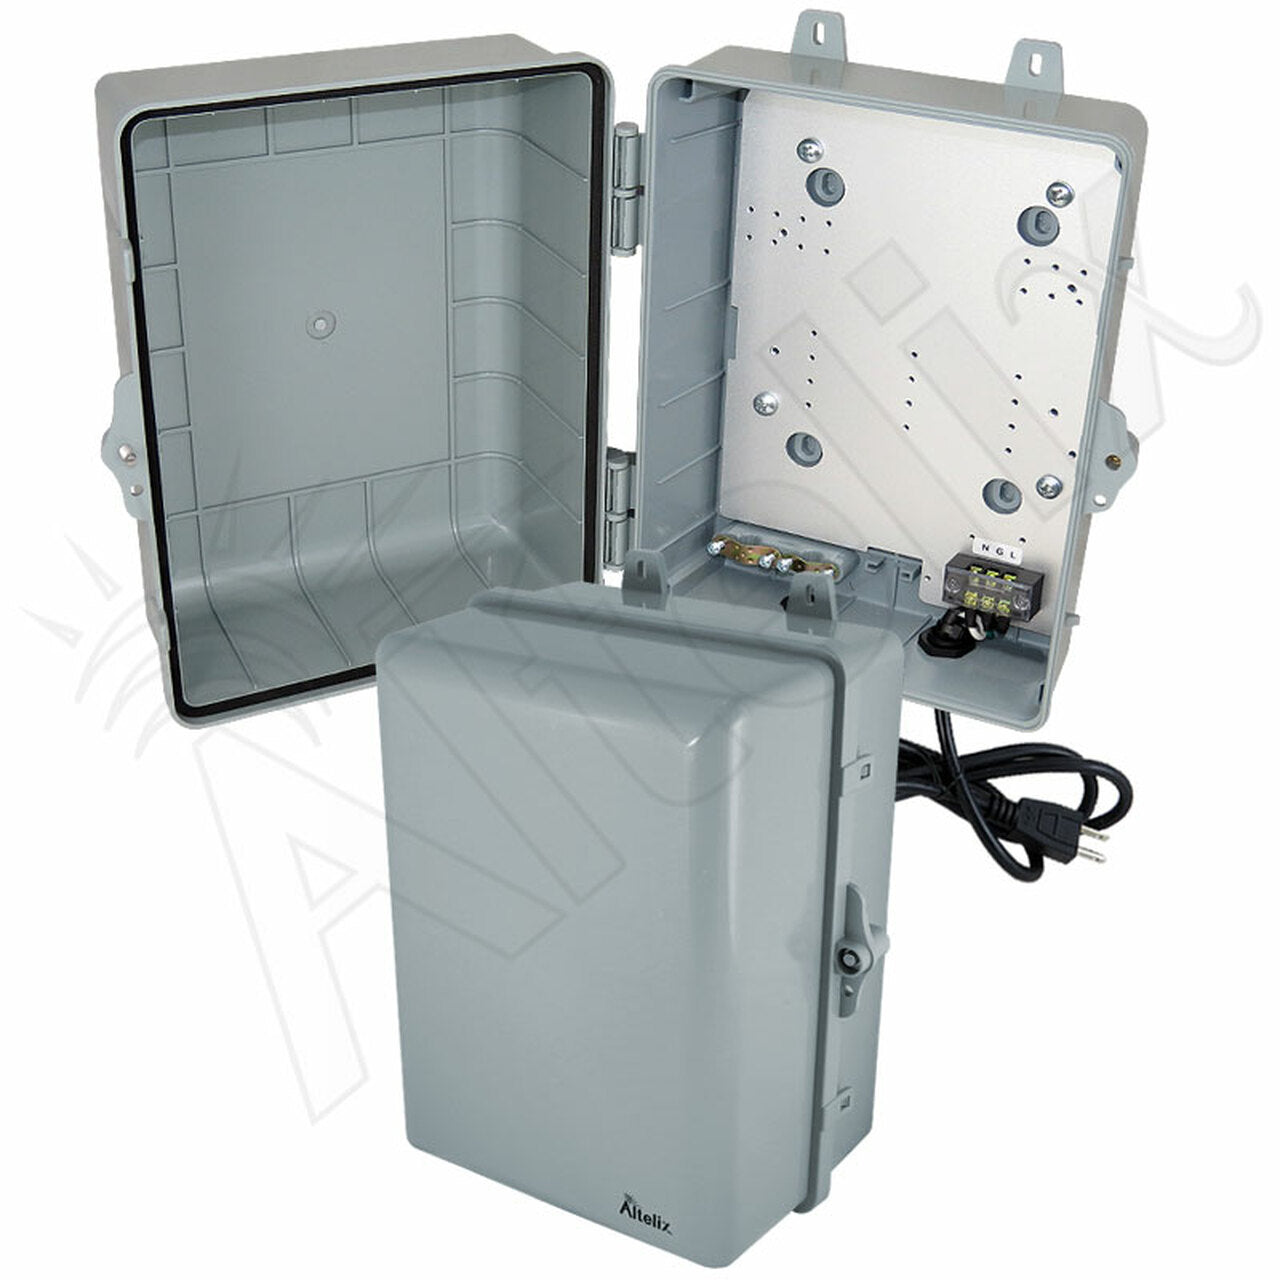 Altelix 12x9x7 NEMA 4X PC+ABS Weatherproof Utility Box NEMA Enclosure with 120 VAC Power Terminal & Power Cord-1